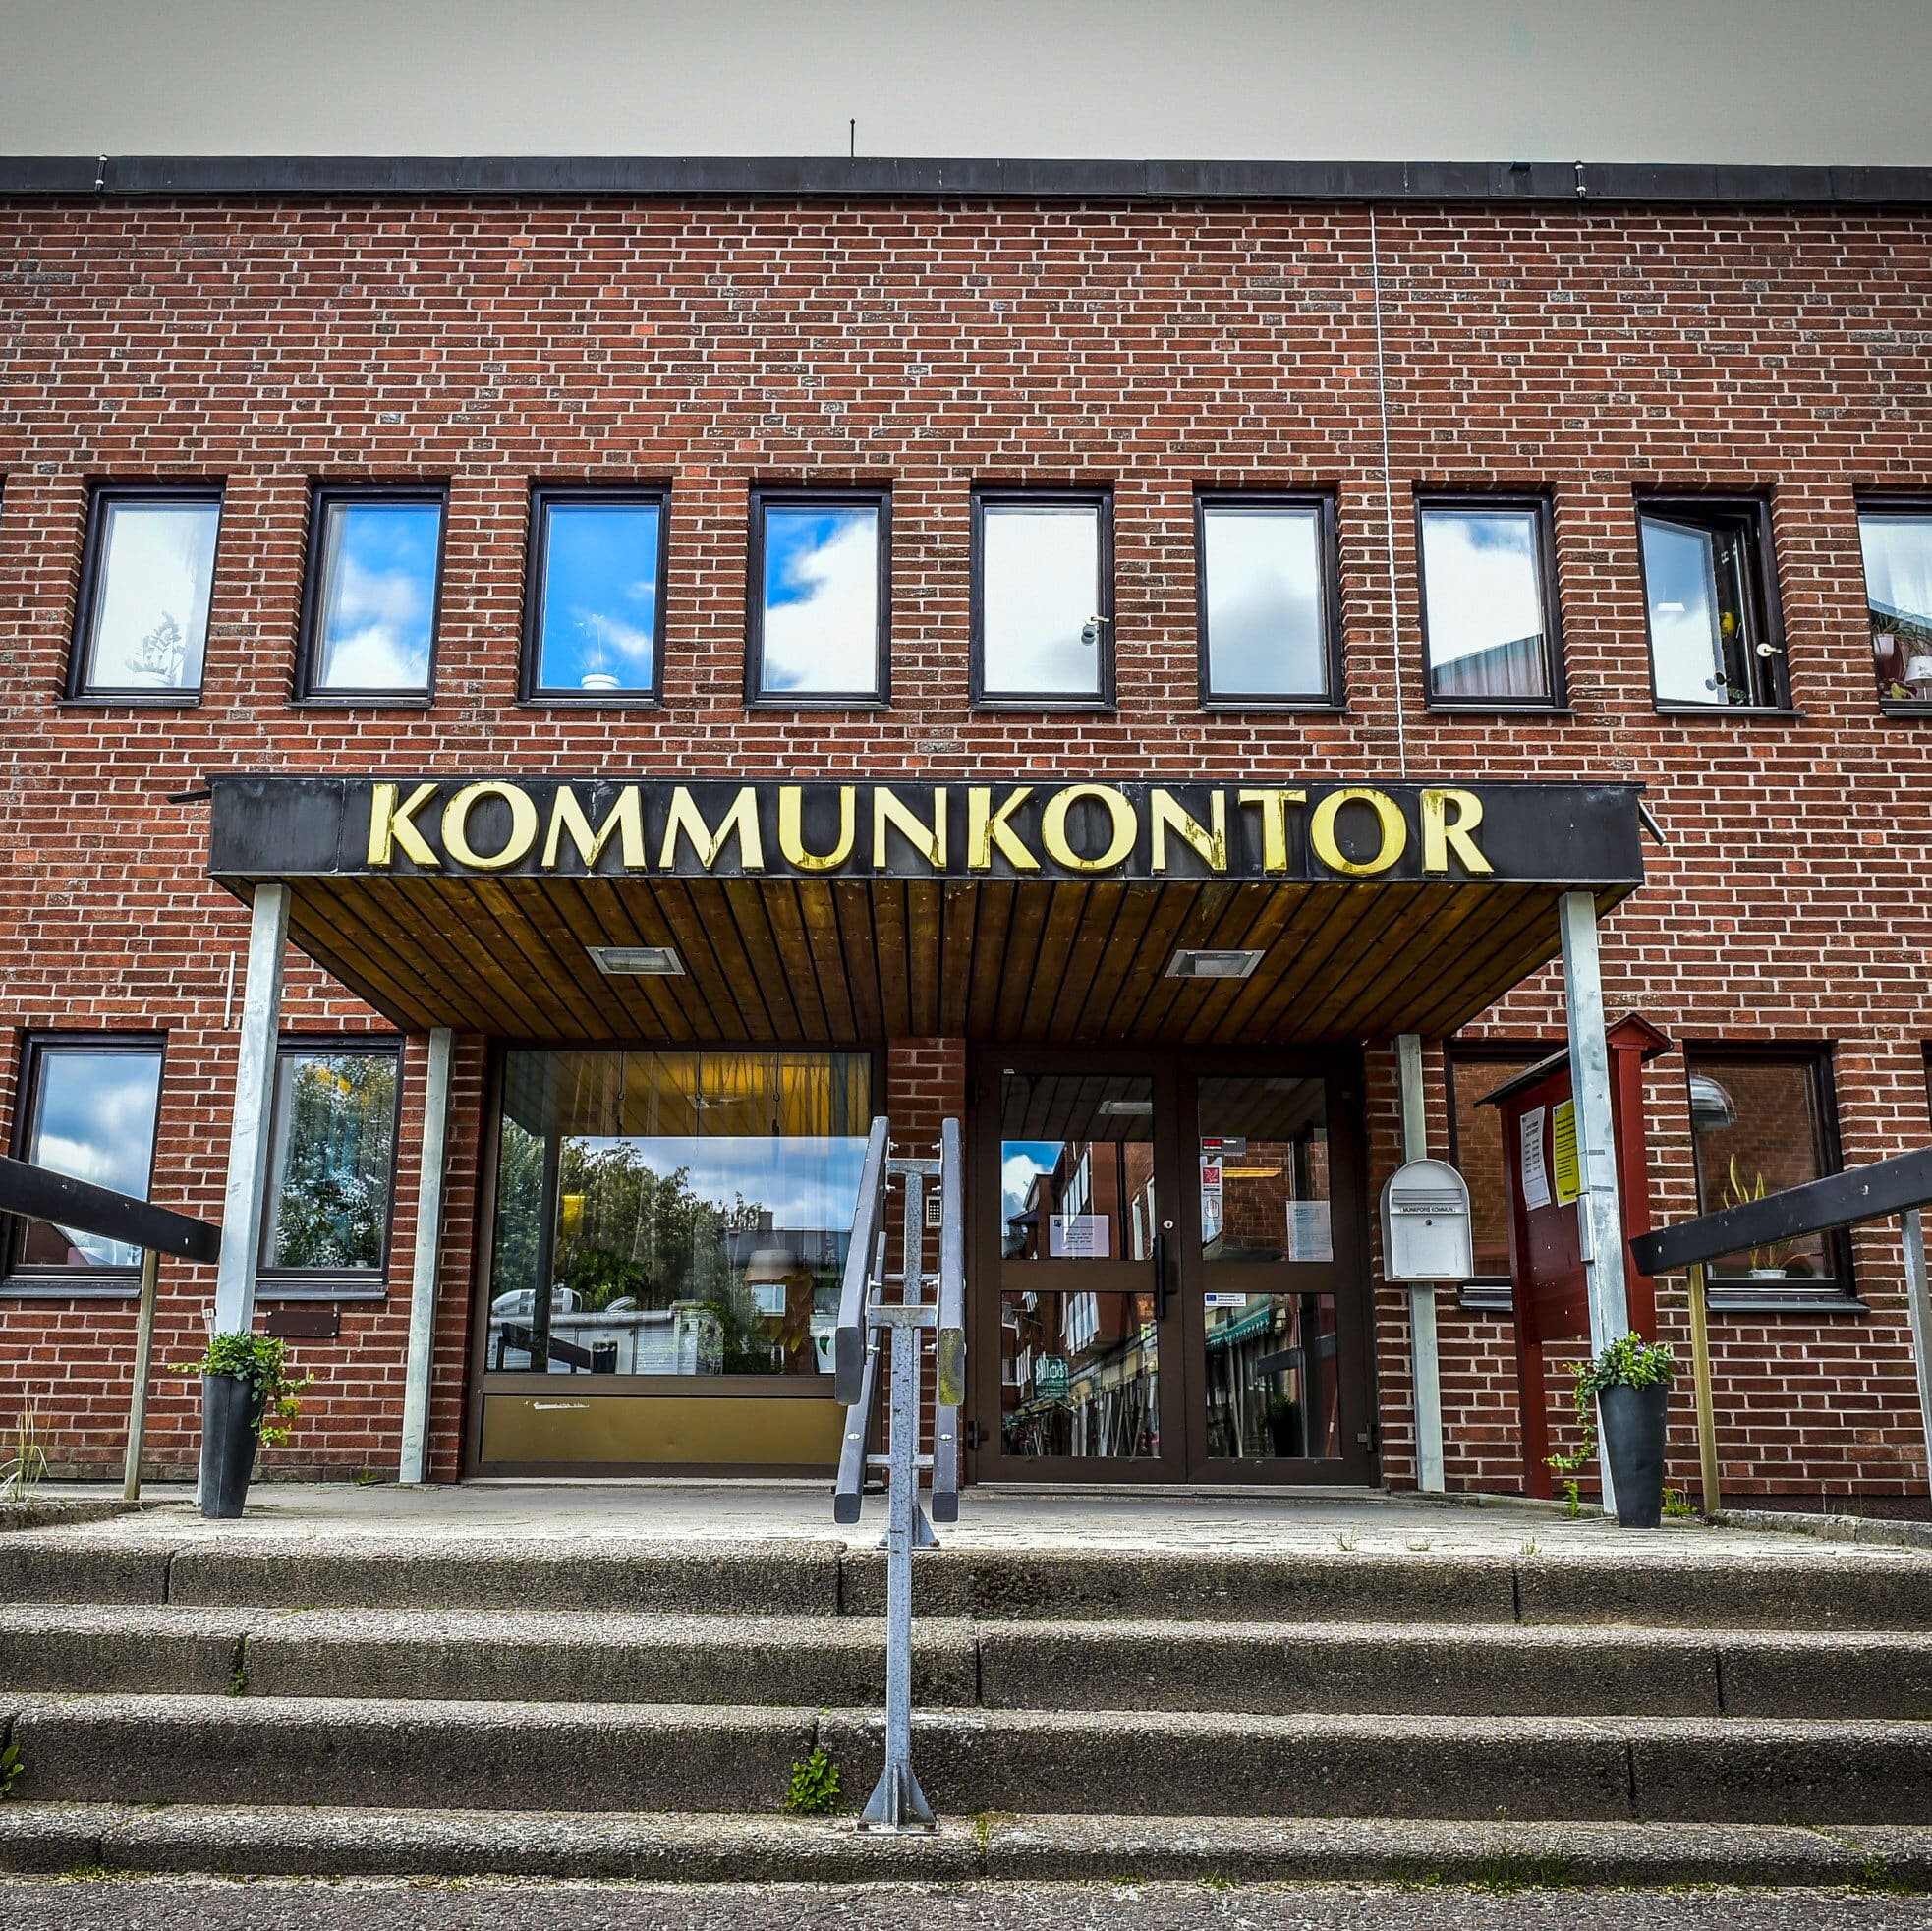  Kommunkontorets byggnad